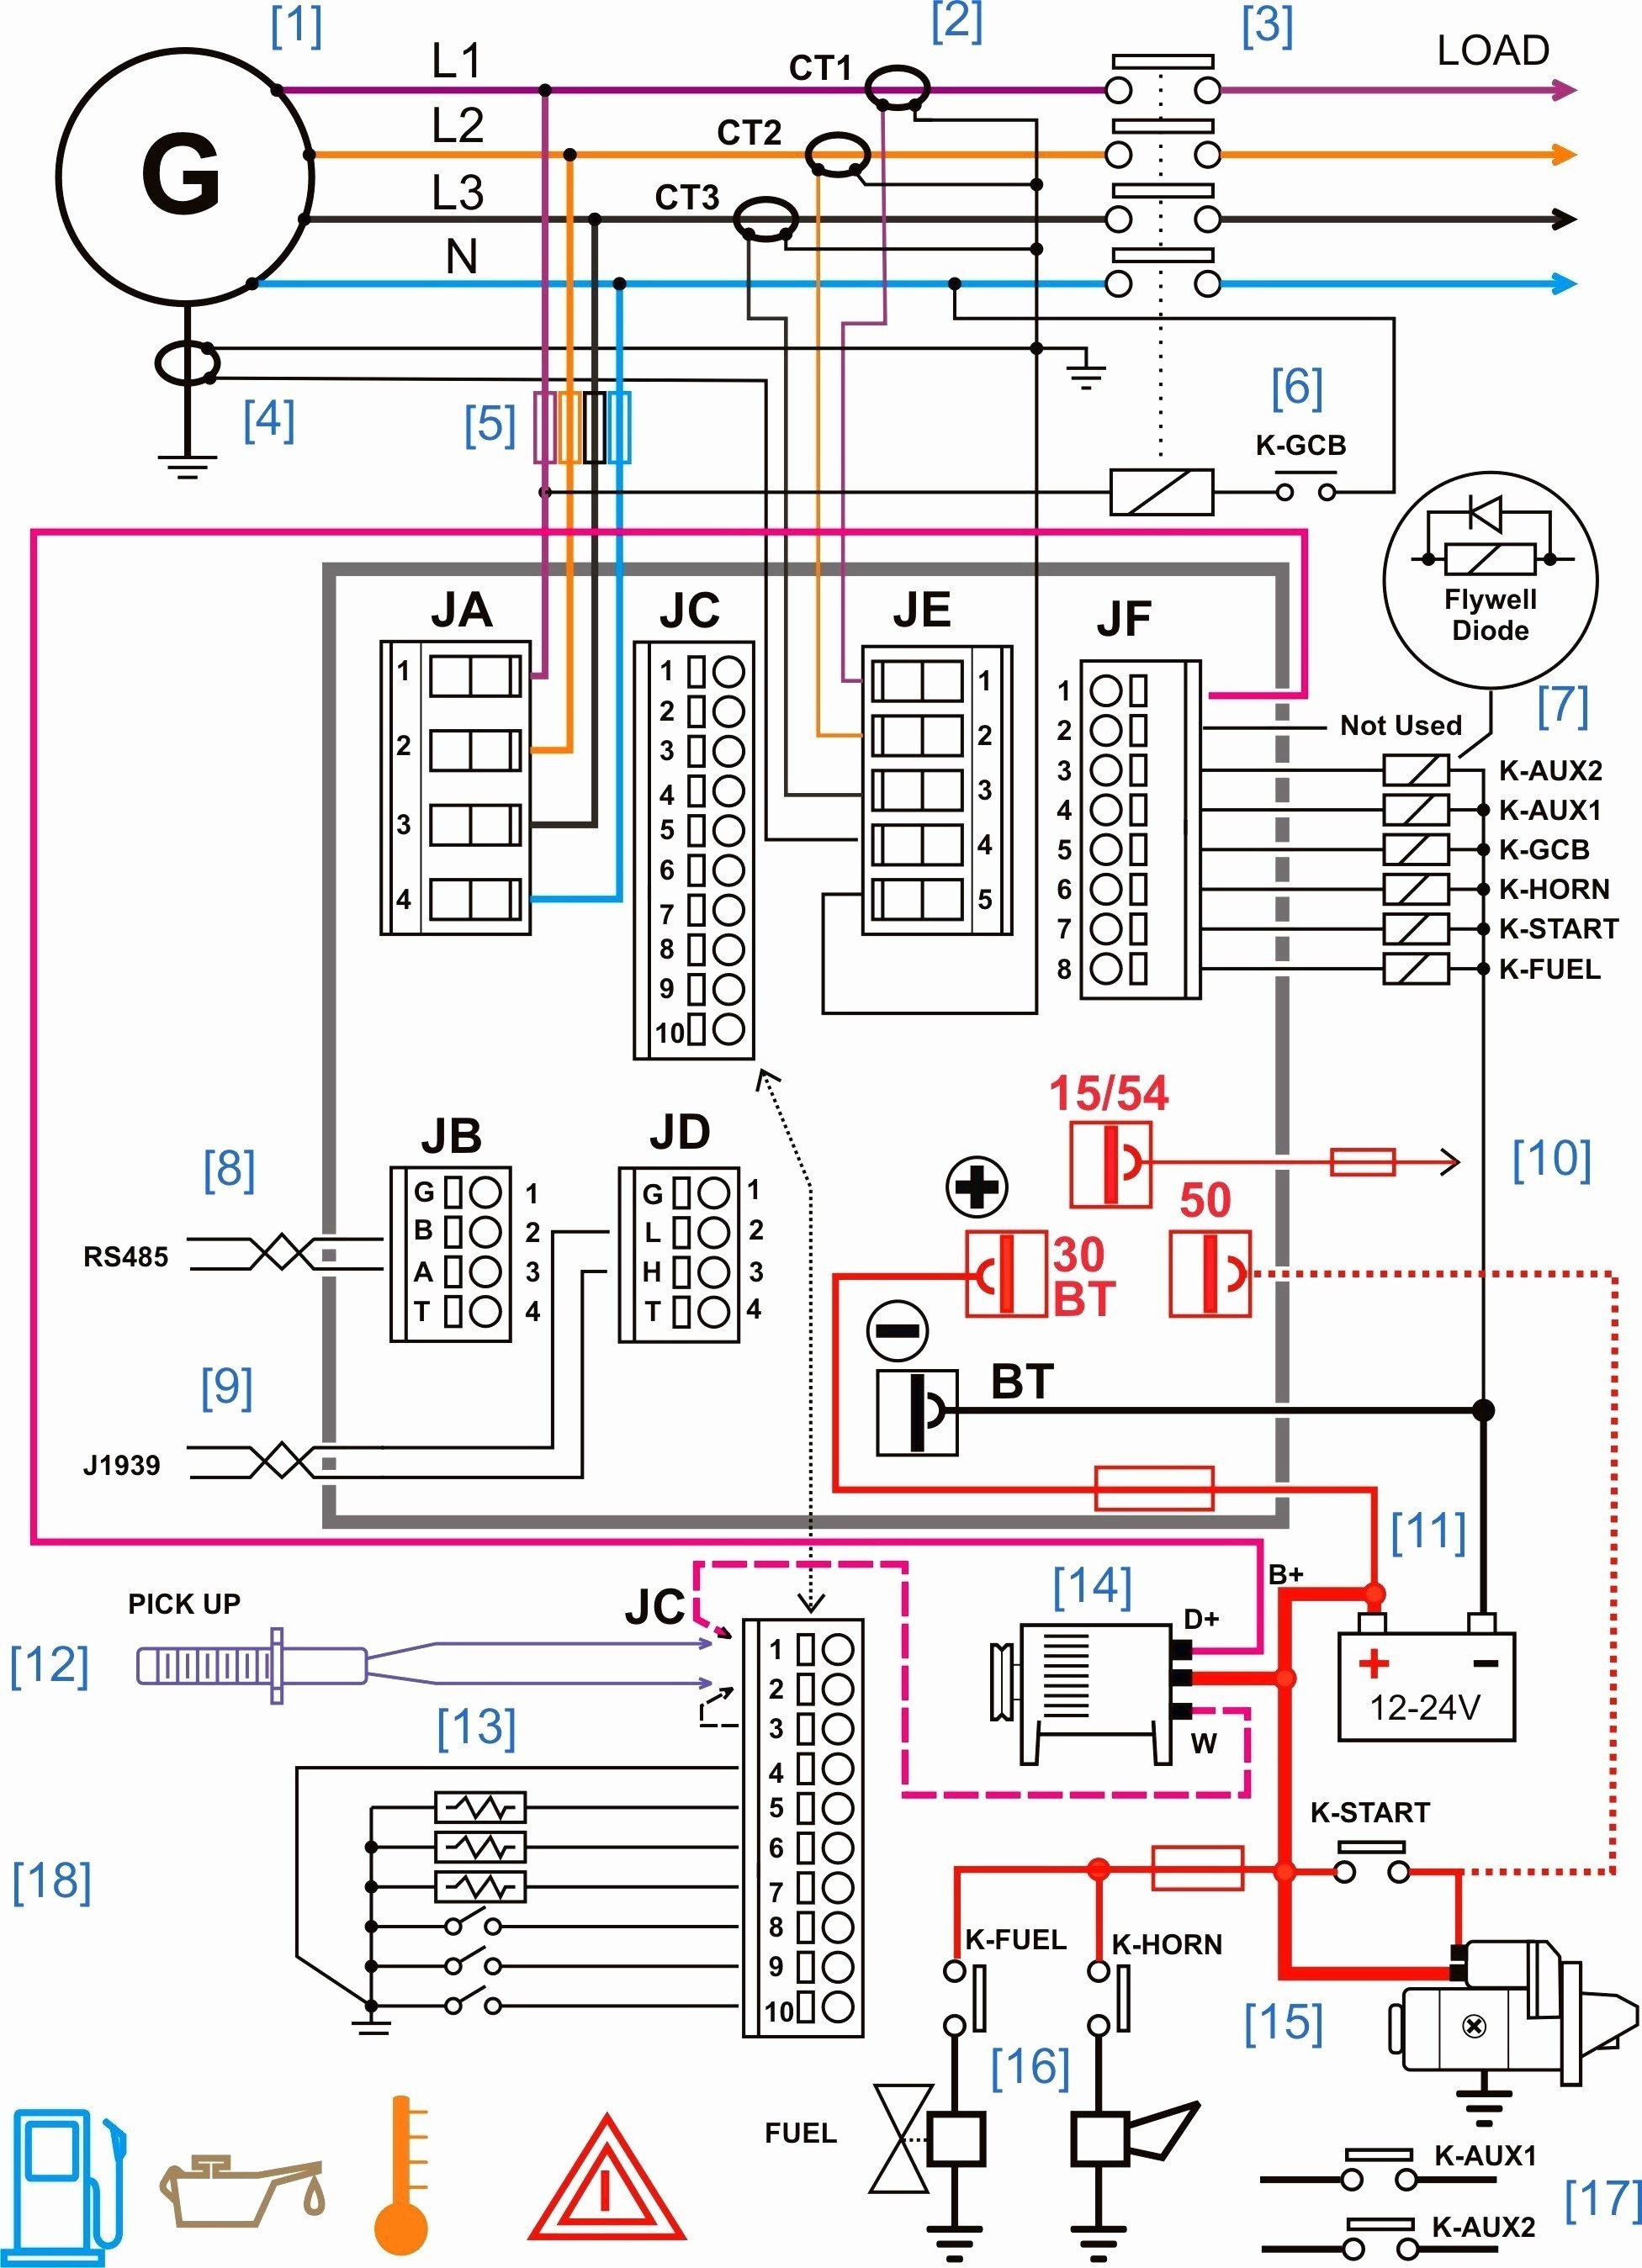 Subaru Wiring Diagram Rate Wiring Diagram In A Car Inspirationa Car Stereo Wiring Diagrams 0d